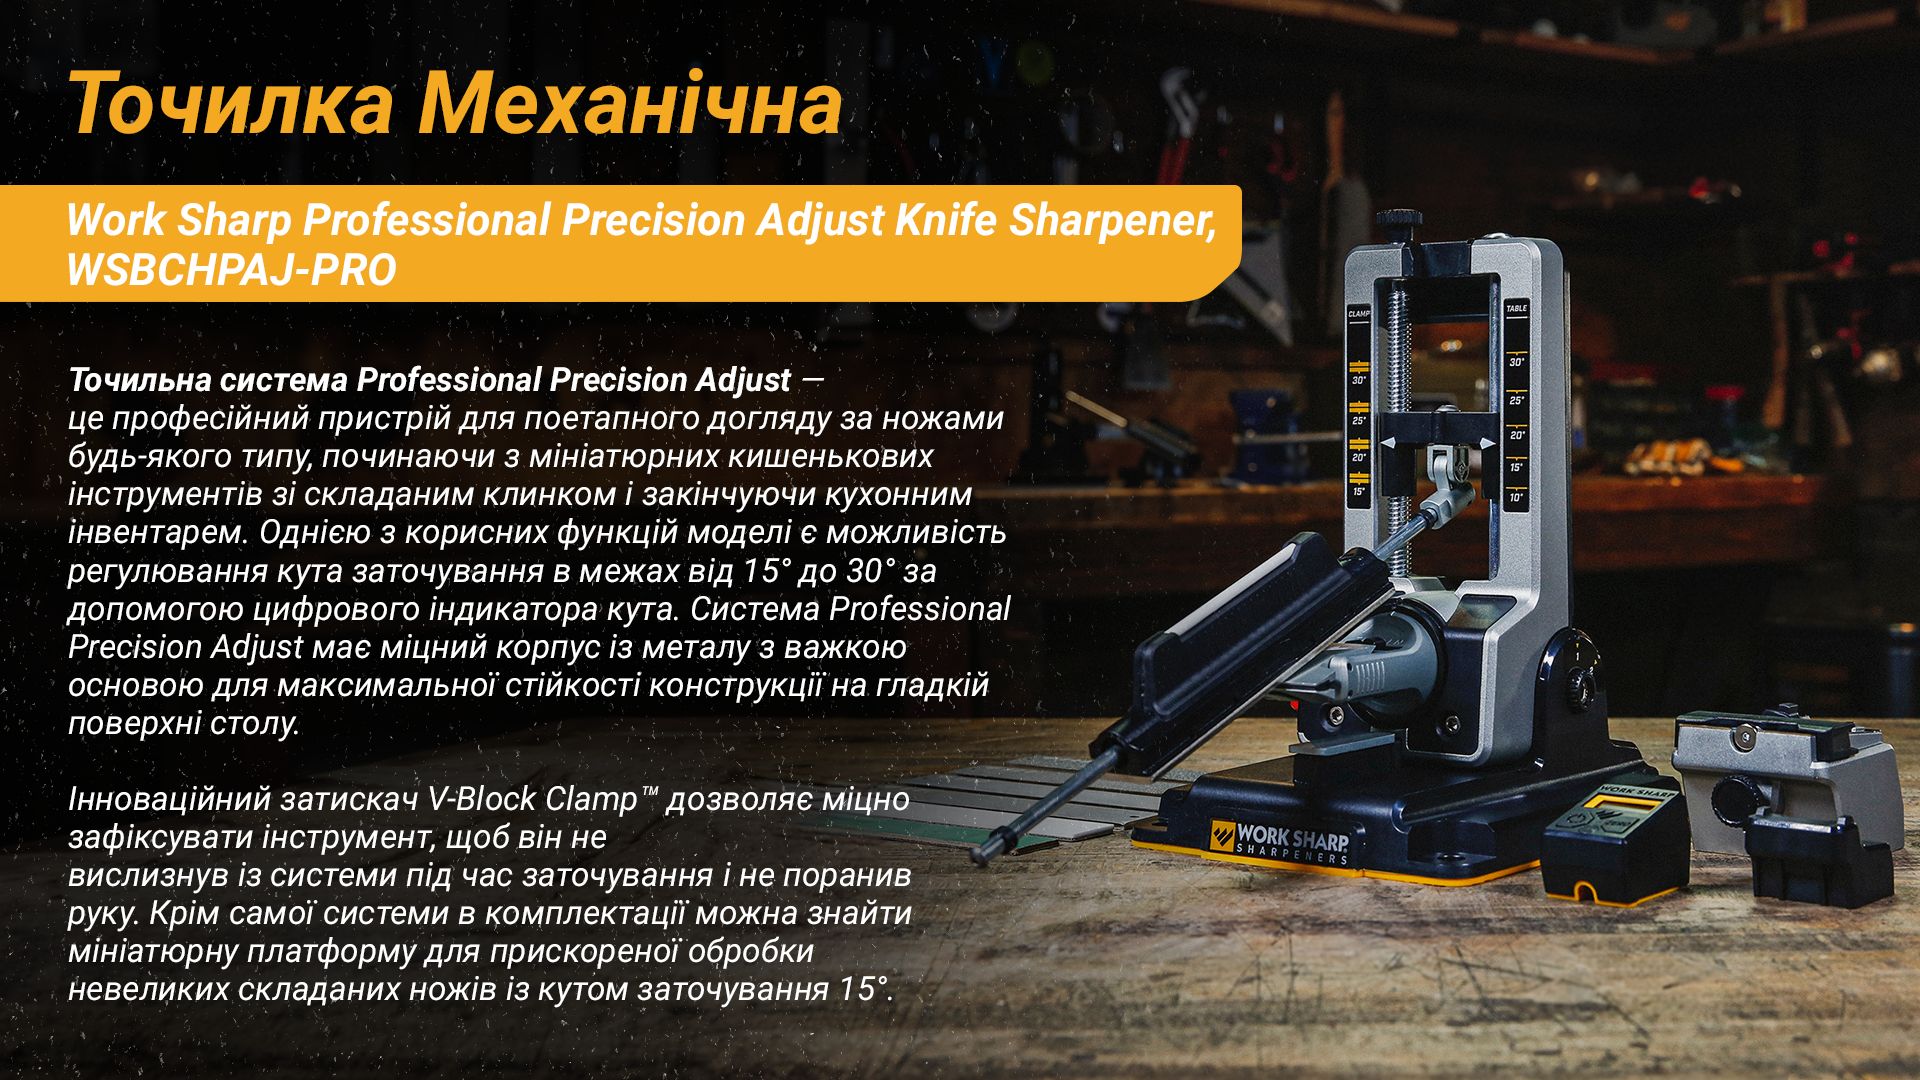 Work Sharp Professional Precision Adjust Knife Sharpener (Pro) WSBCHPAJ-PRO